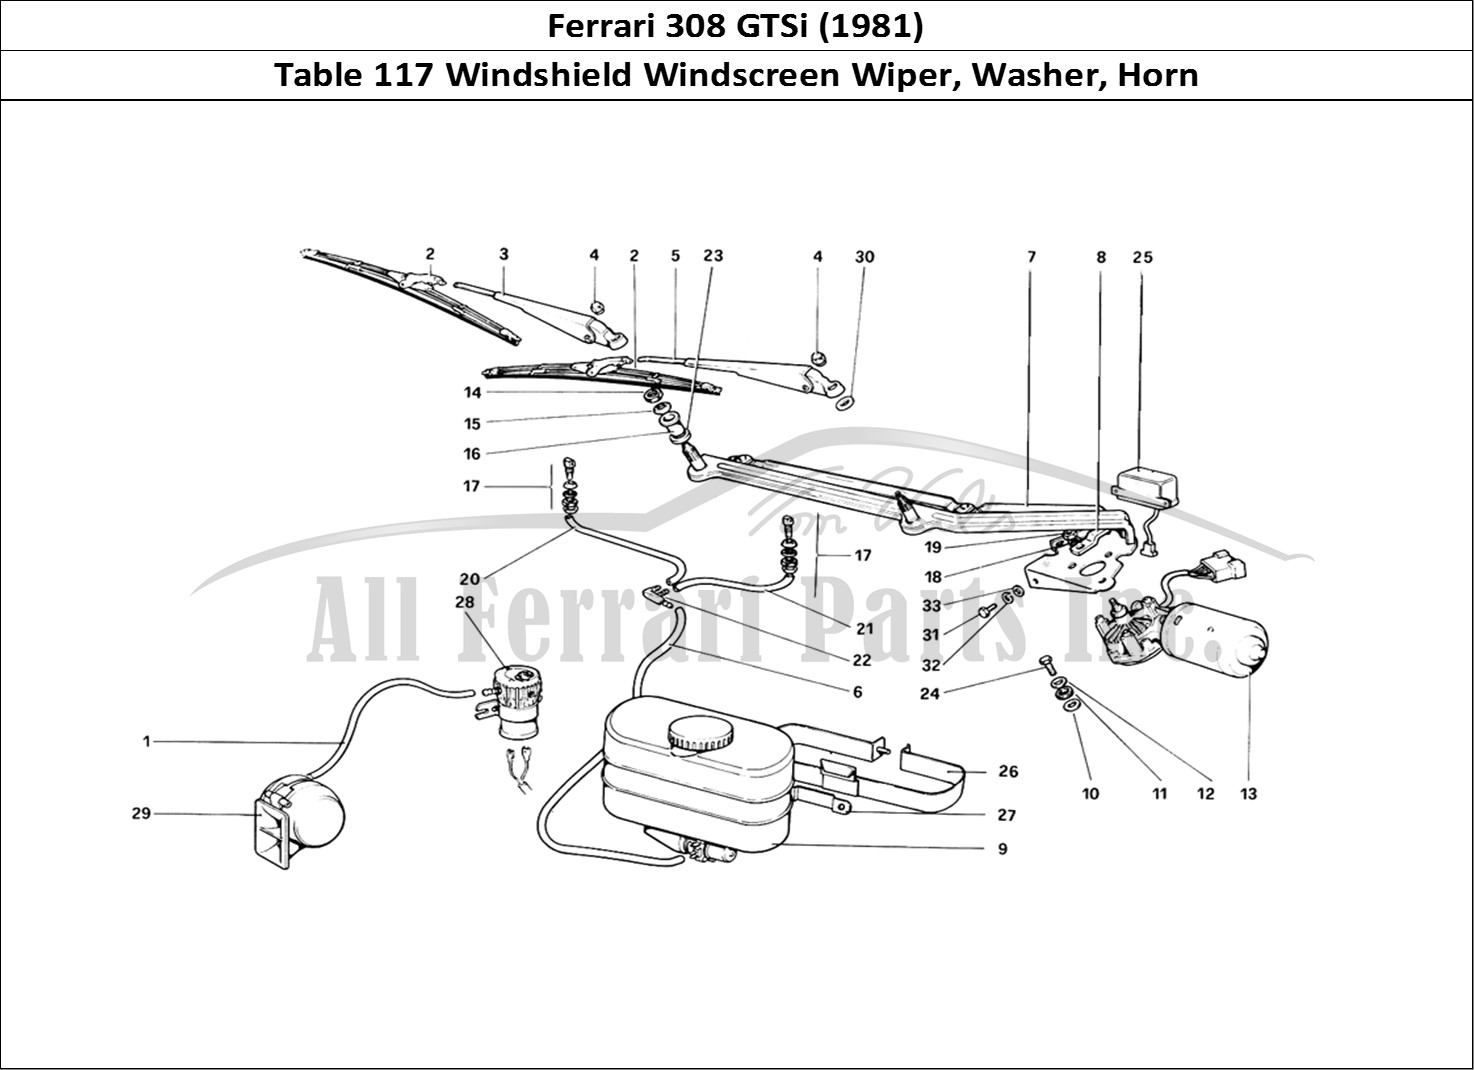 Ferrari Parts Ferrari 308 GTBi (1981) Page 117 Windshield Wiper, Washer